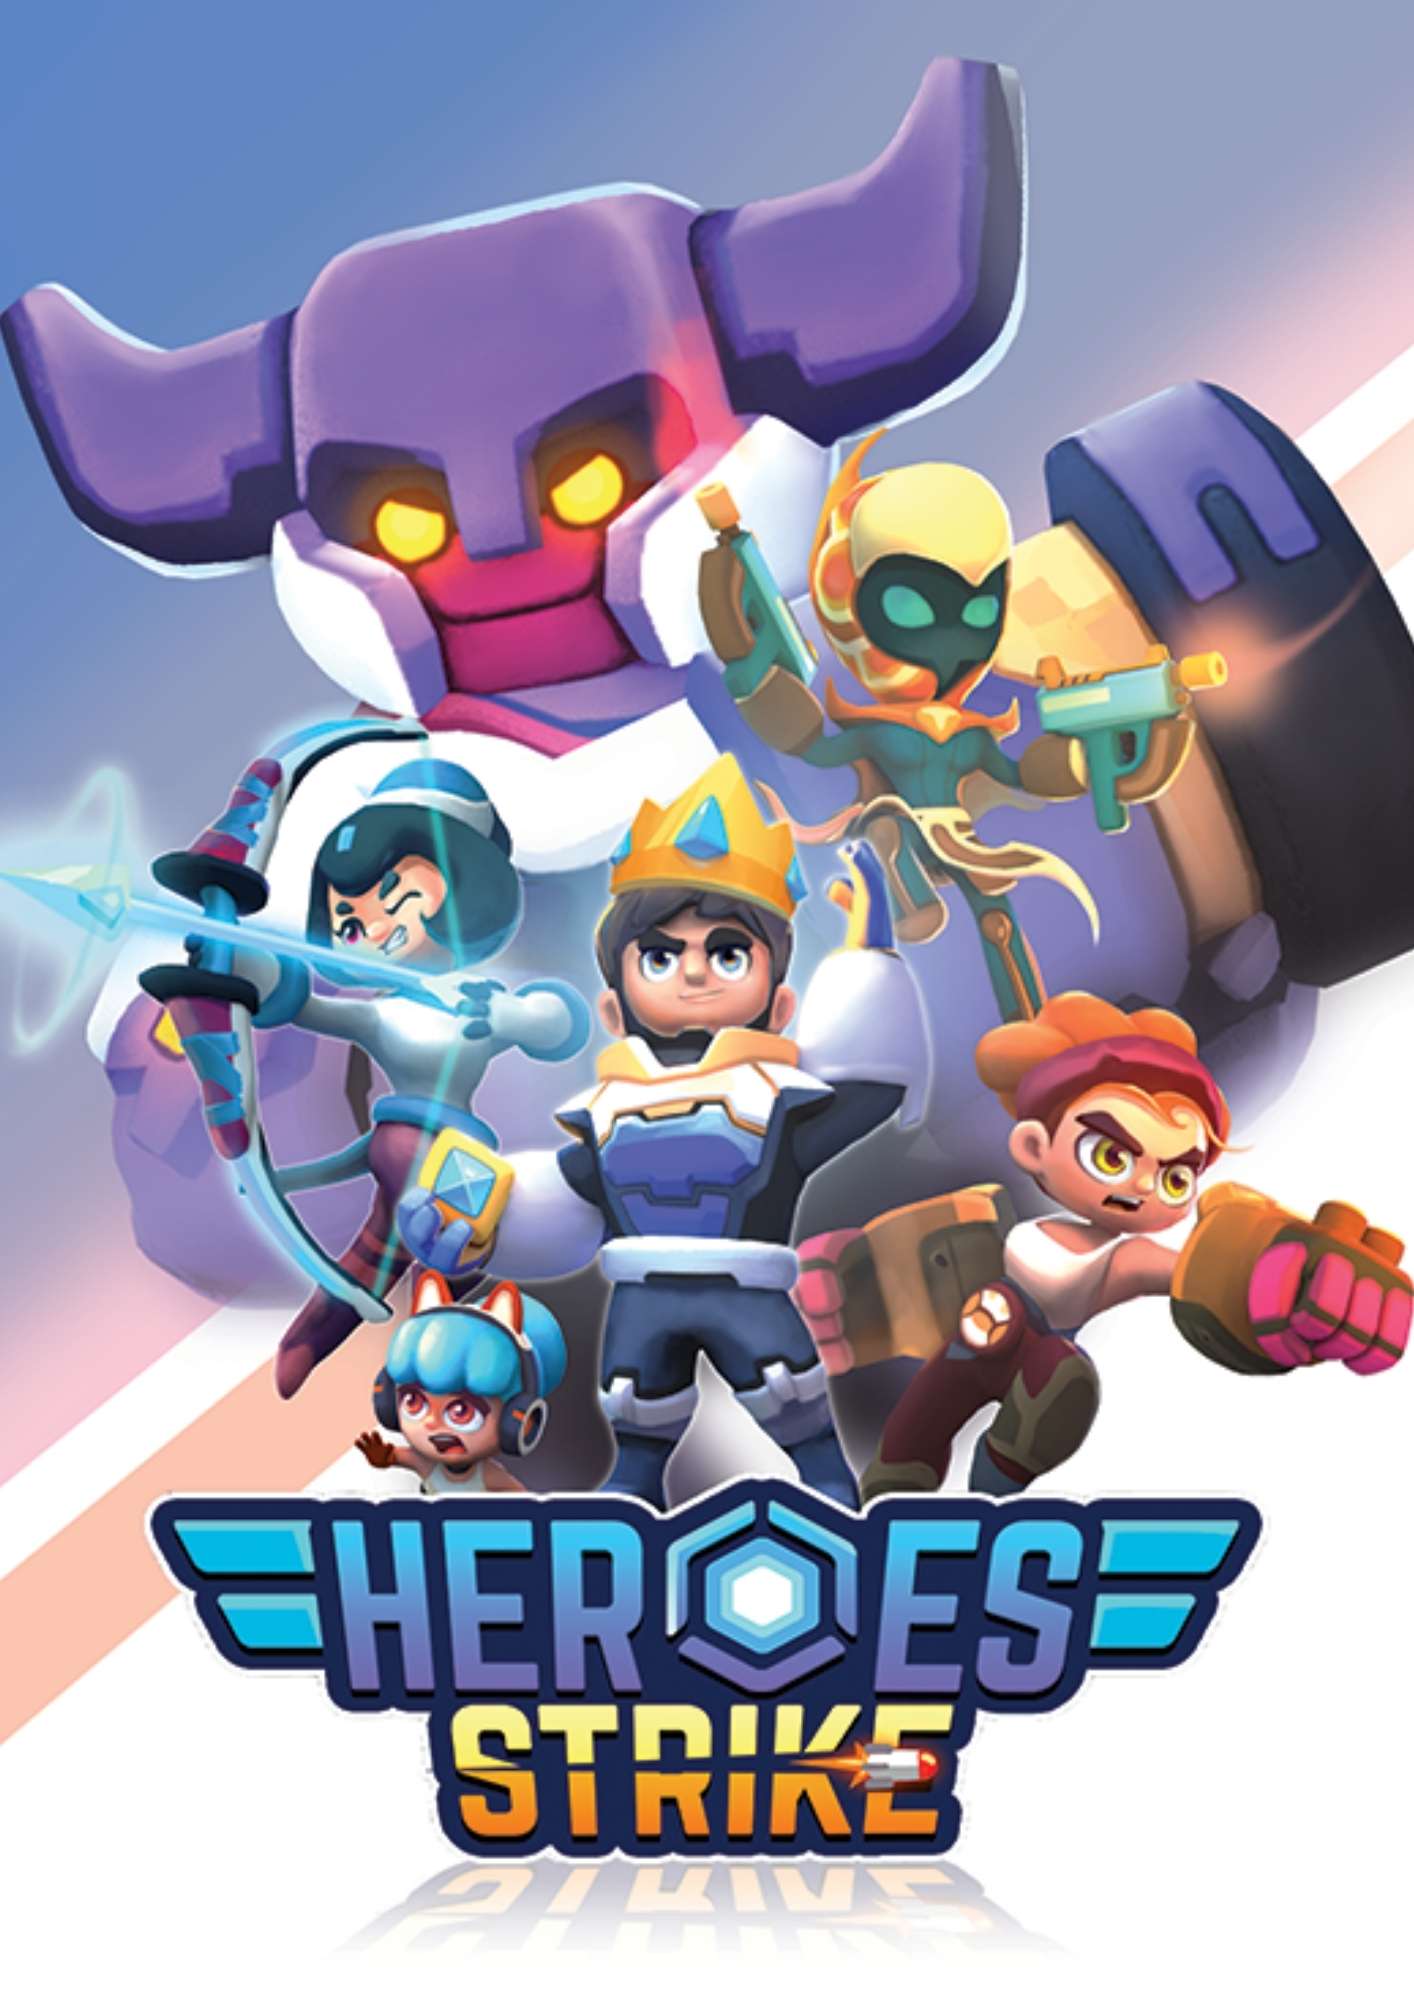 Heroes strike offline. Герои страйк. Heroes Strike offline - MOBA. Code game Heroes Strike.